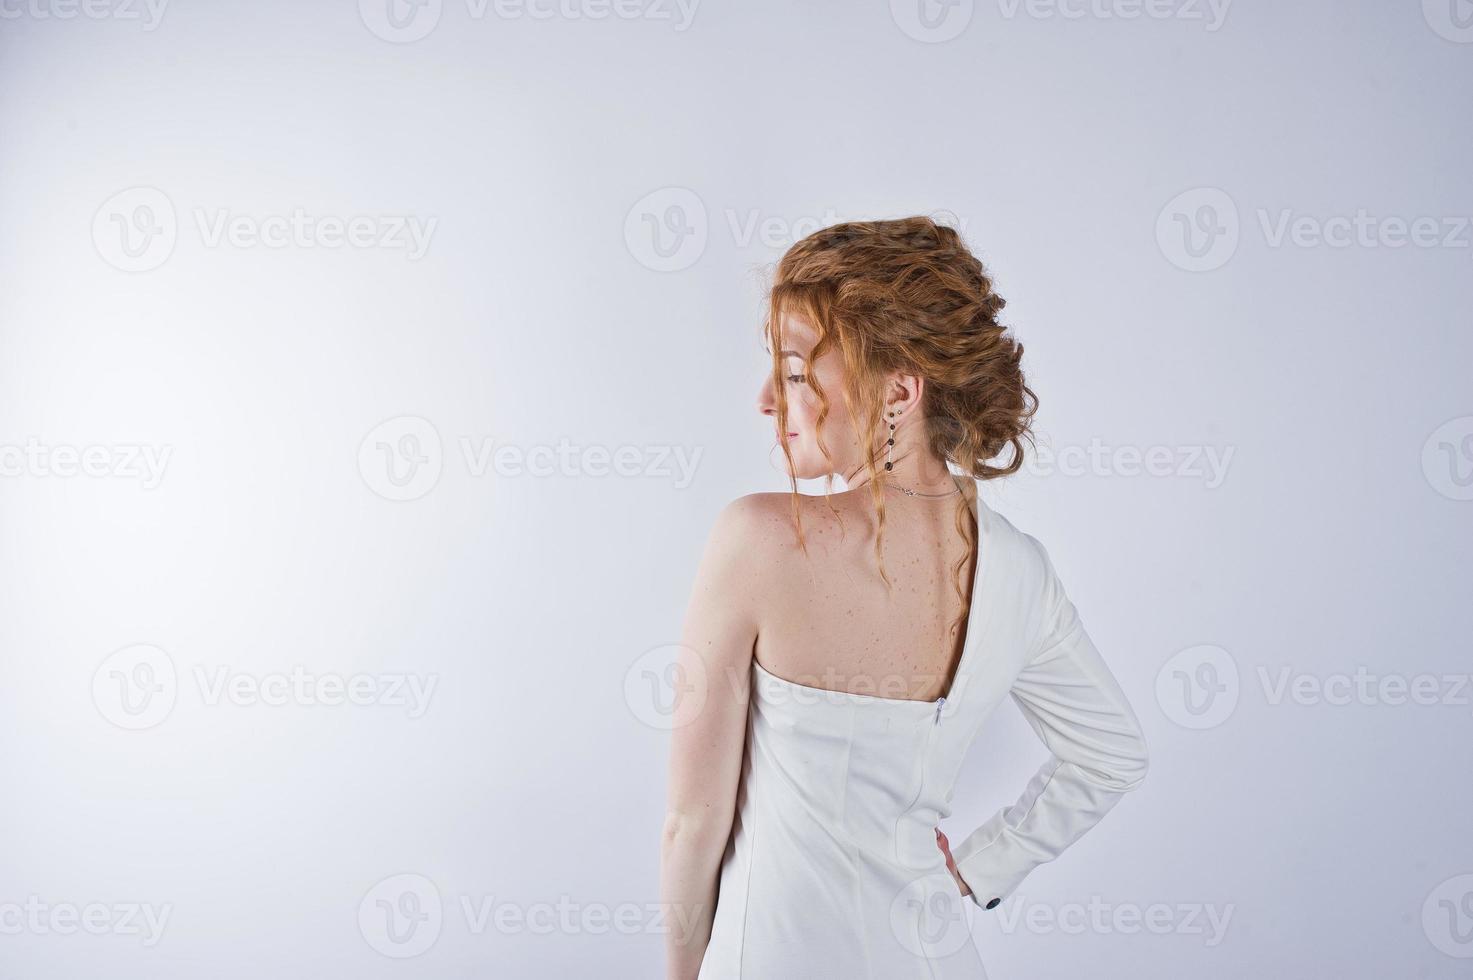 garota de cabelo encaracolado isolada no fundo branco do estúdio. foto